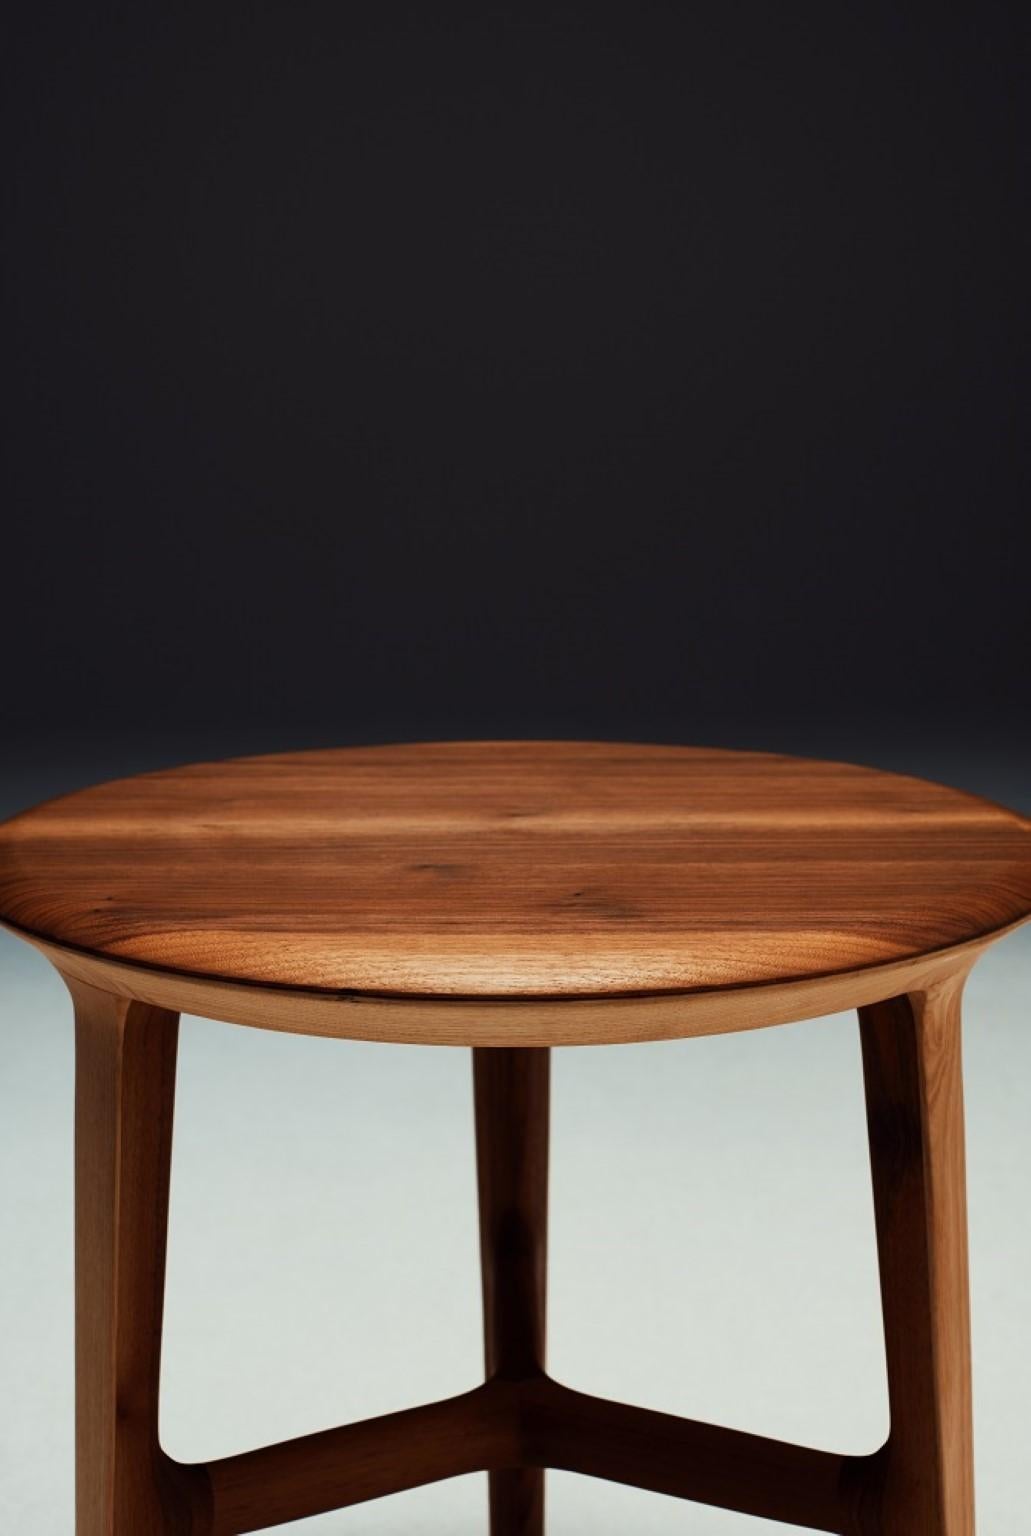 Organic Modern Yakisugi Table Basse by Noé Duchaufour Lawrance For Sale